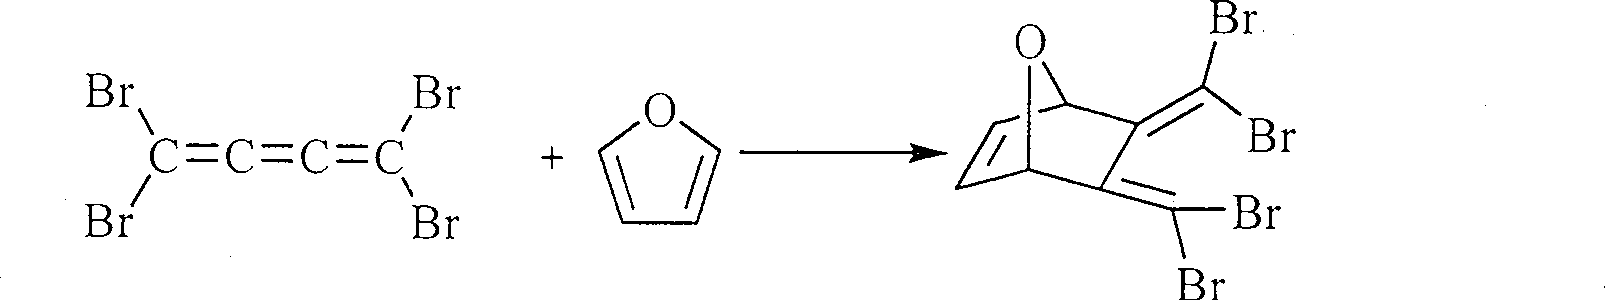 Method for preparing 1,1,4,4-tetrahalogenated-1,3-butadiene derivative by 1,4-dihalogenated-1,4-di(trisilicon methyl radical)-1,3-butadiene derivatives